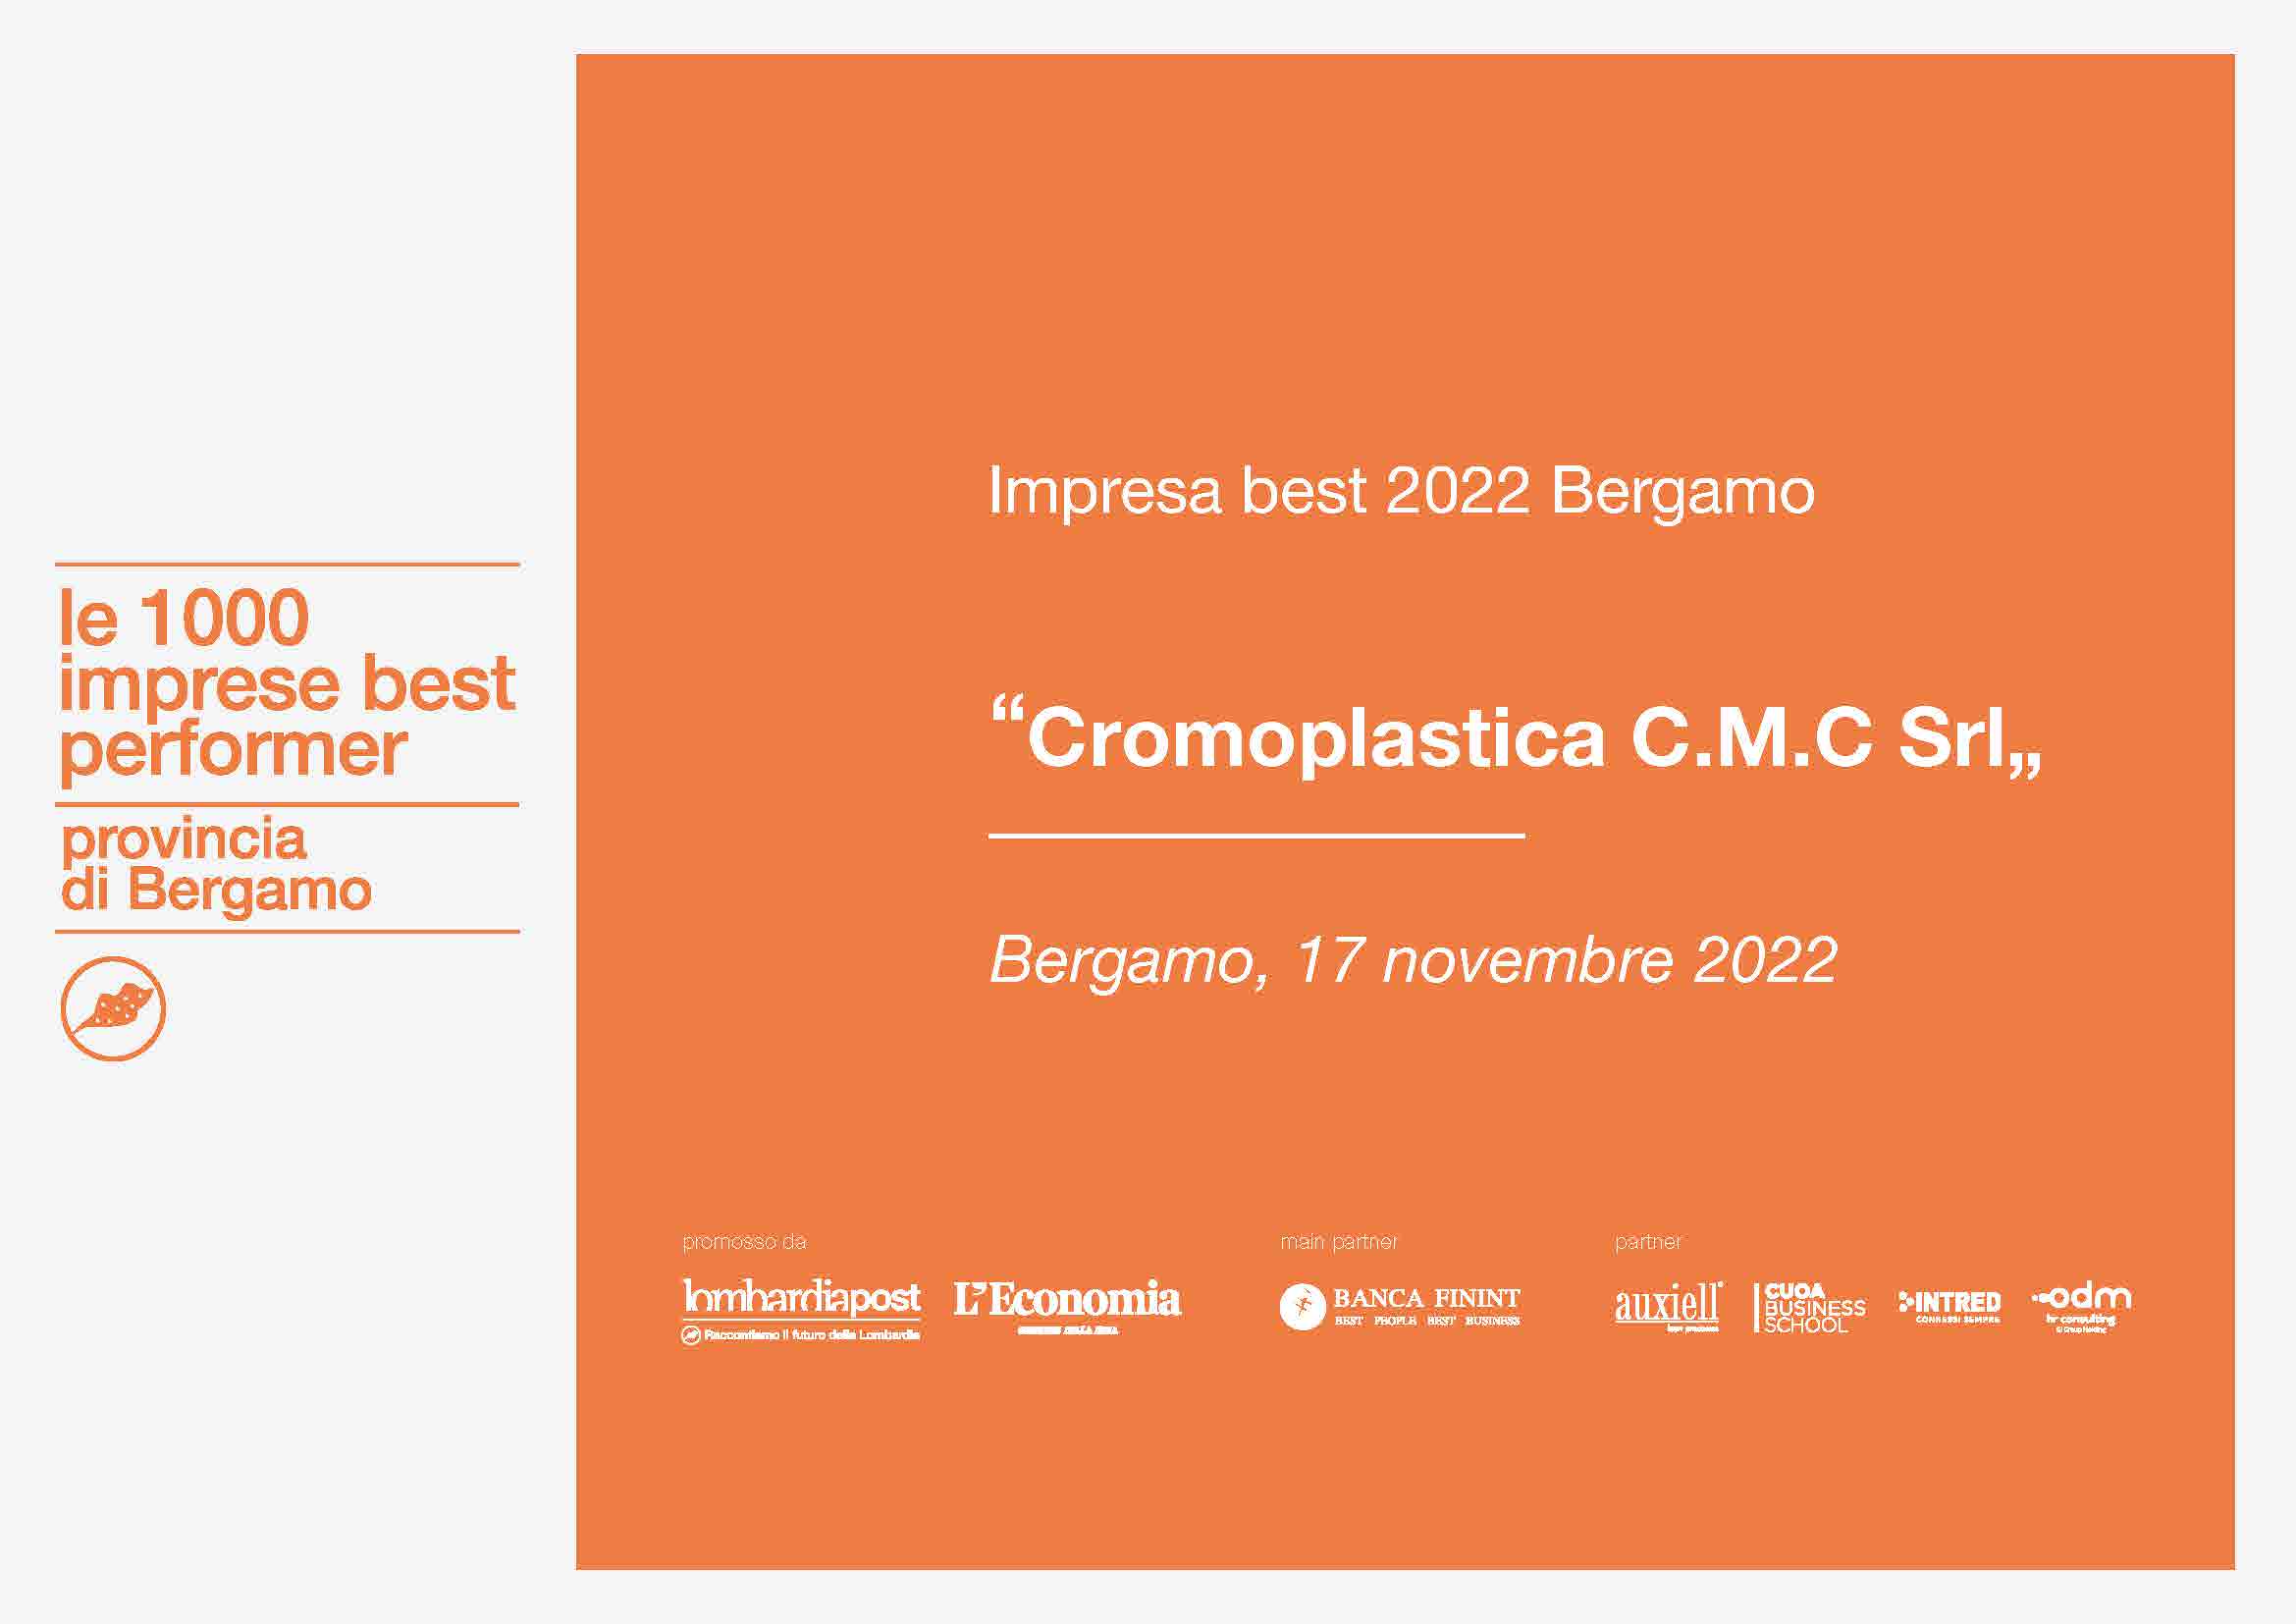 Cromoplastica-Impresa-best-2022-Bergamo